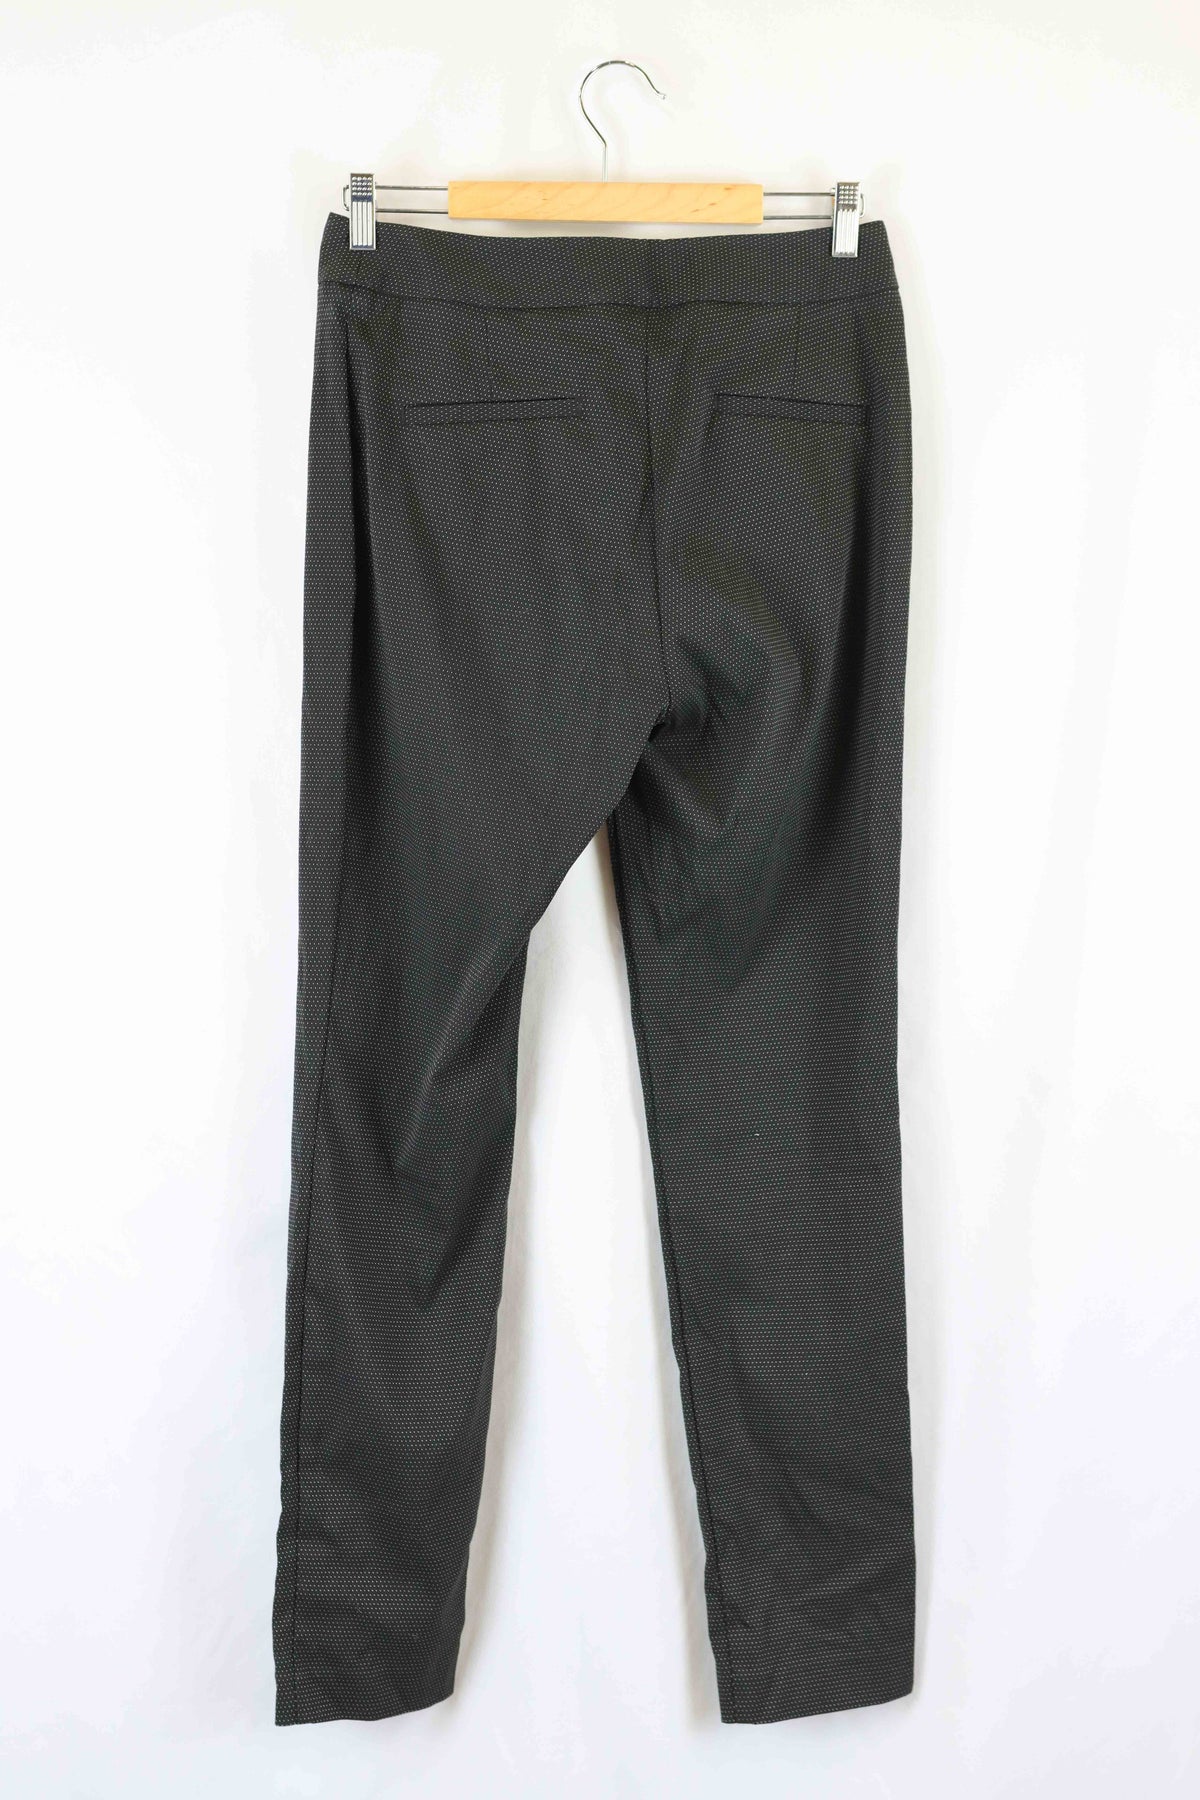 Cue Black Pants 10